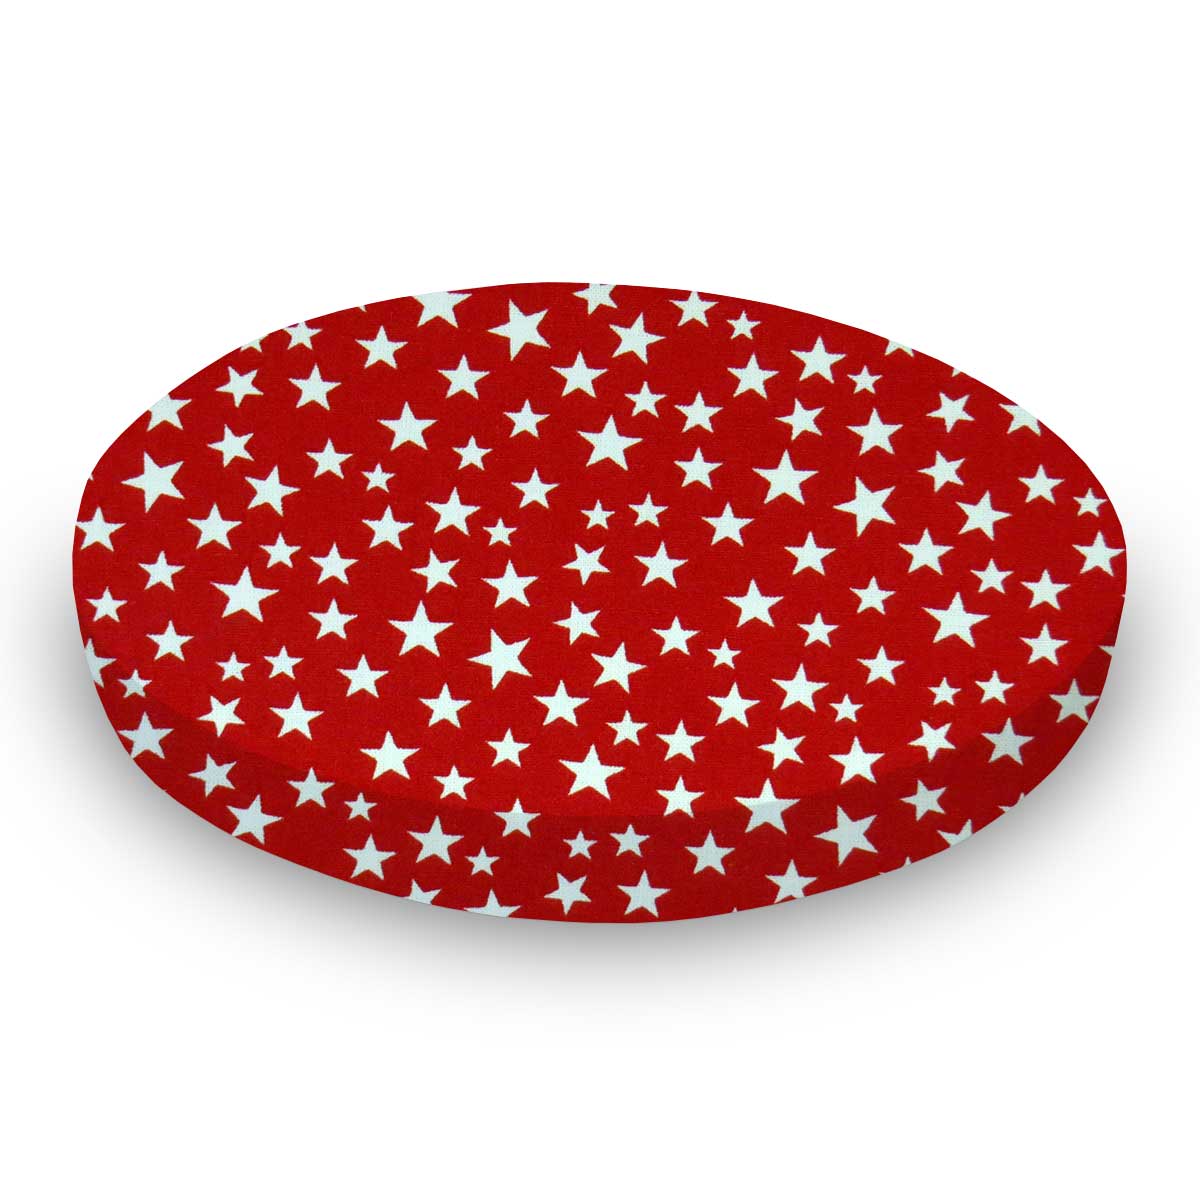 Oval Crib (Stokke Sleepi) - Stars Red - Fitted  Oval